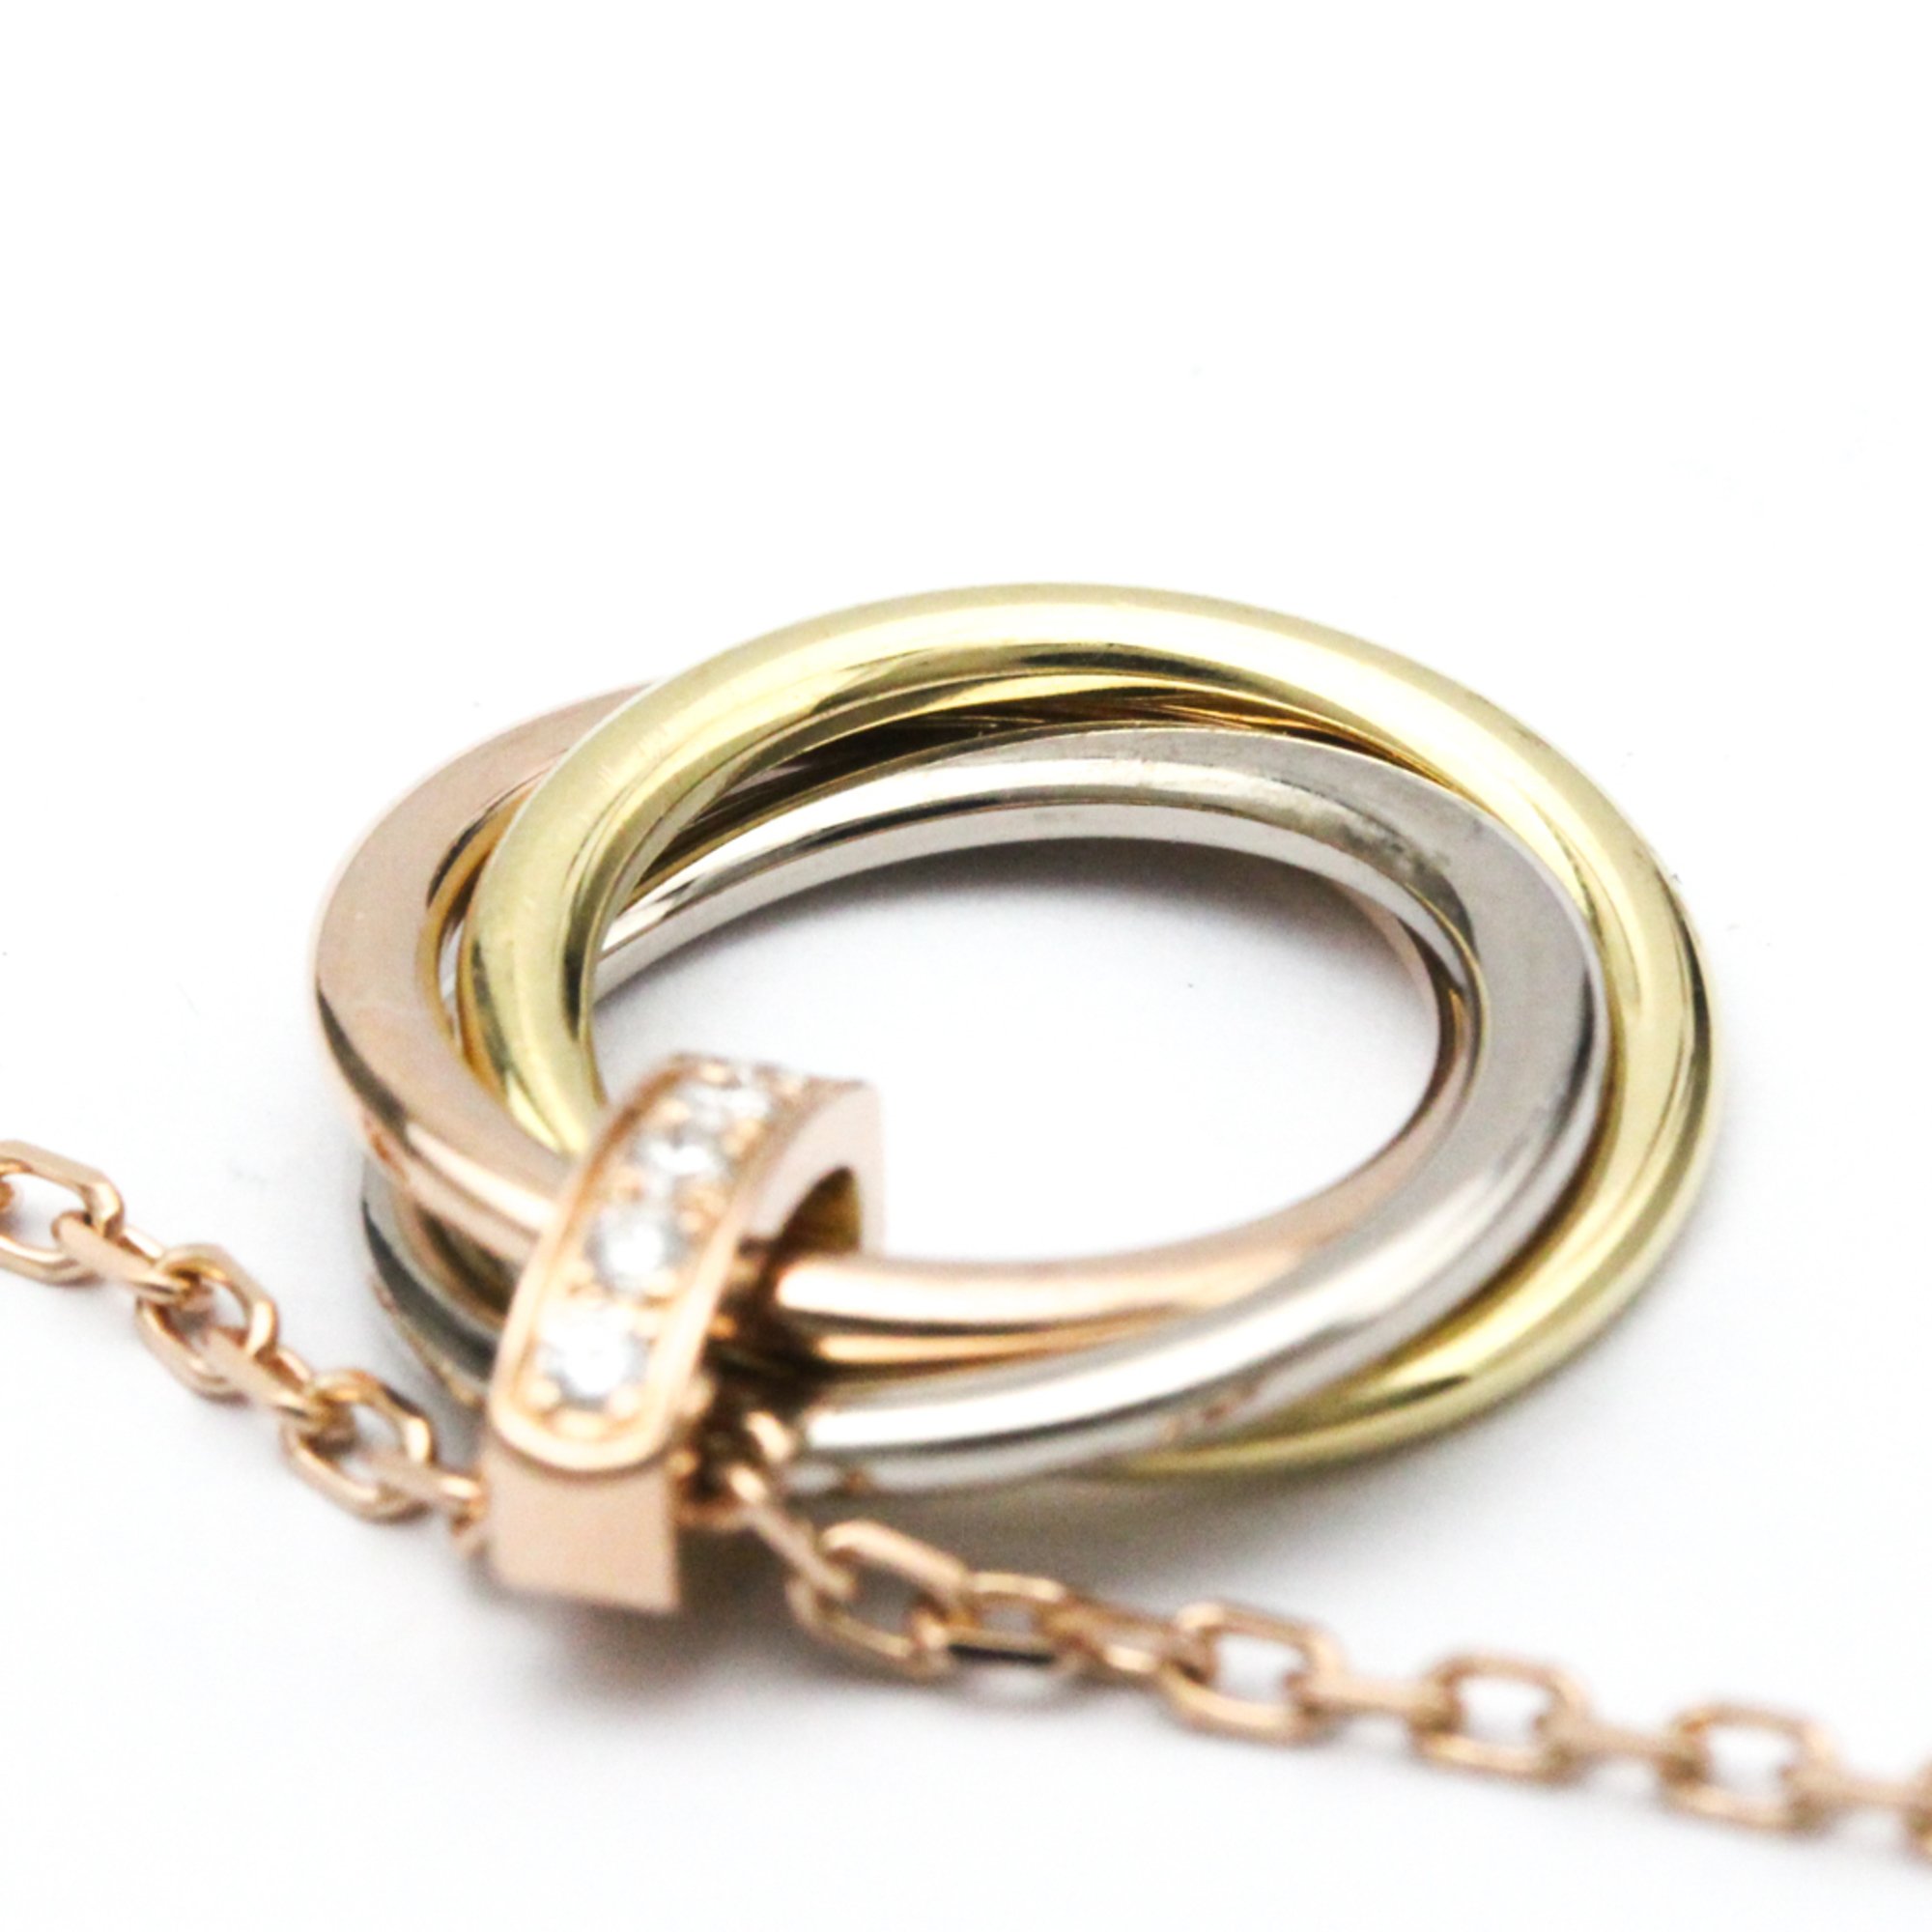 Cartier Trinity De Cartier Pink Gold (18K),White Gold (18K),Yellow Gold (18K) Diamond Men,Women Fashion Pendant Necklace